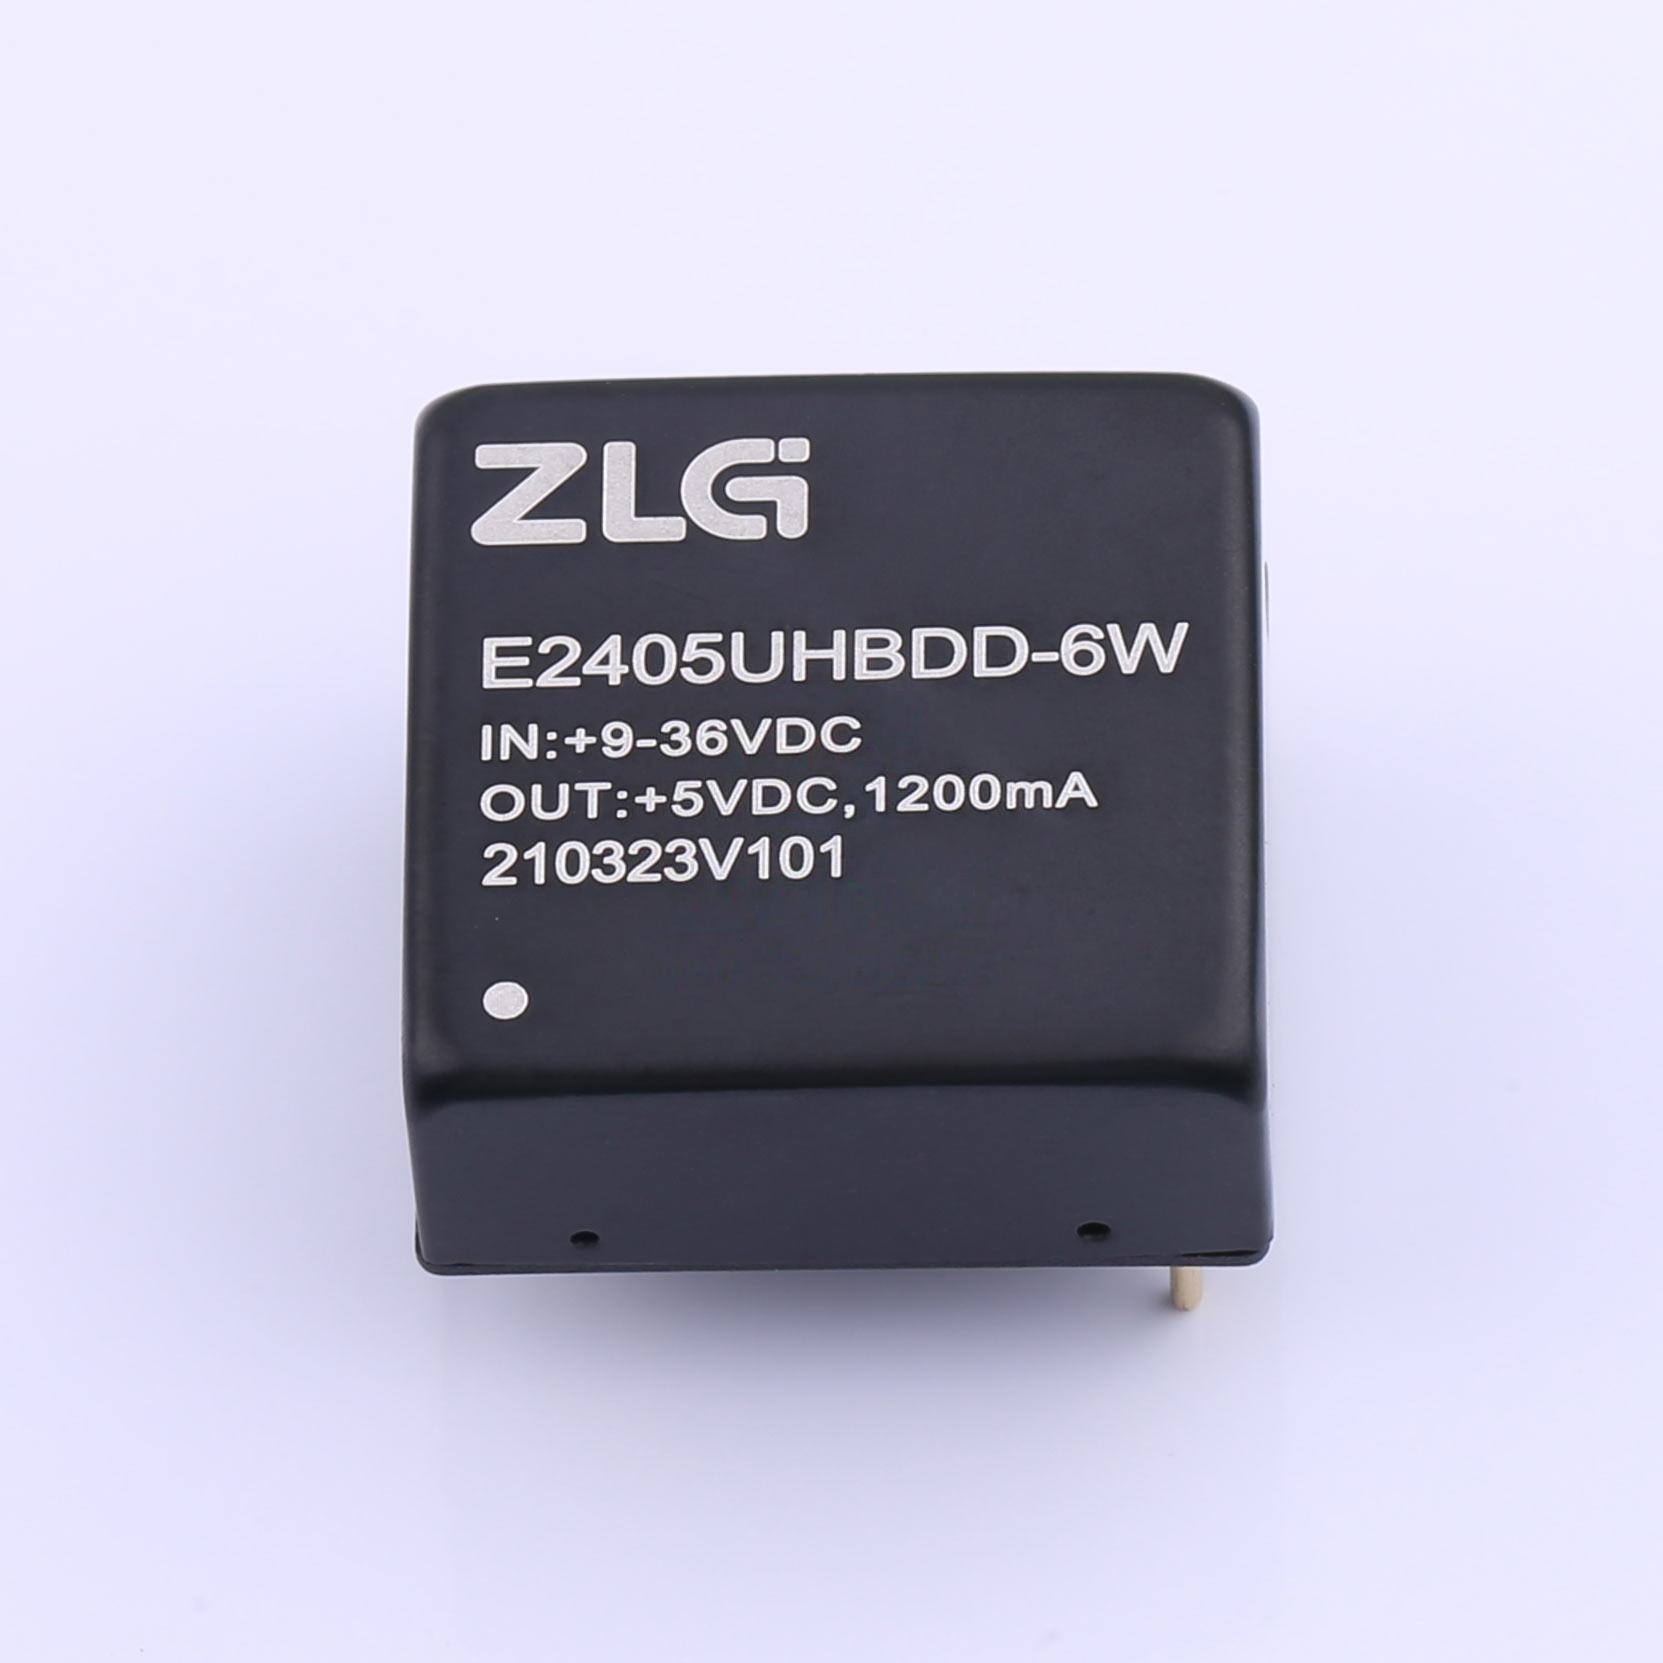 ZLG(致远电子) E2405UHBDD-6W